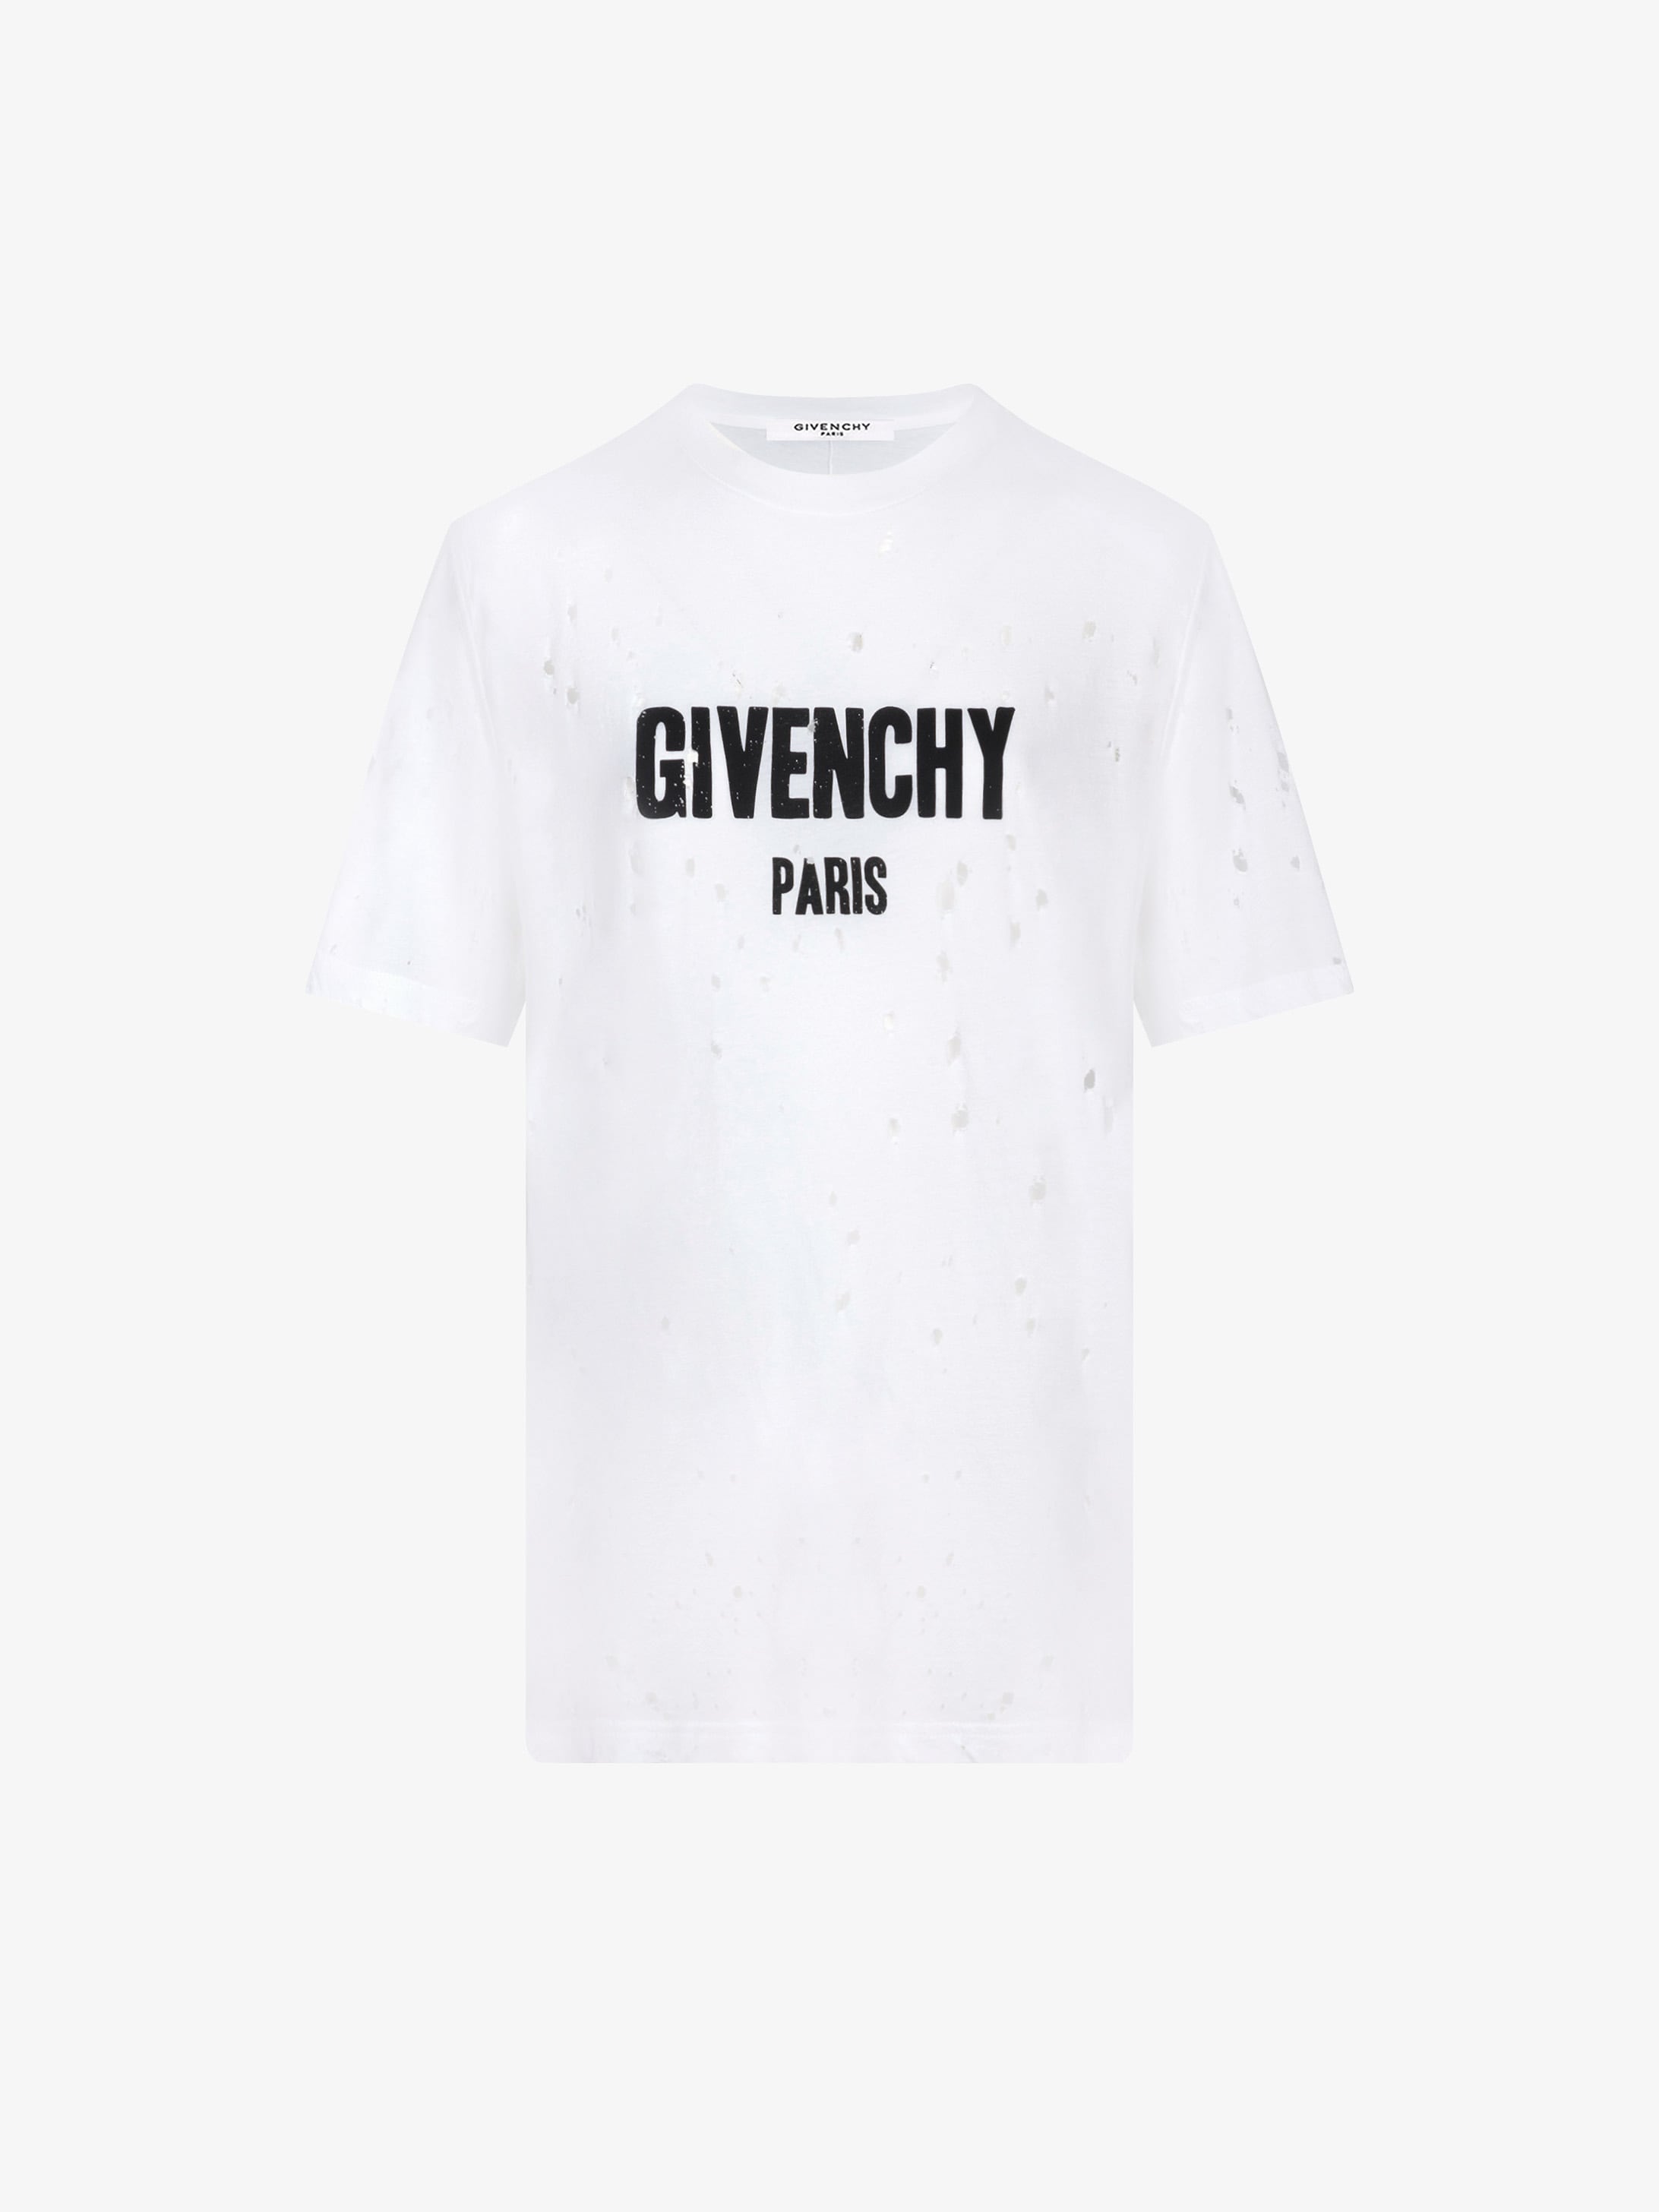 givenchy paris t shirt price